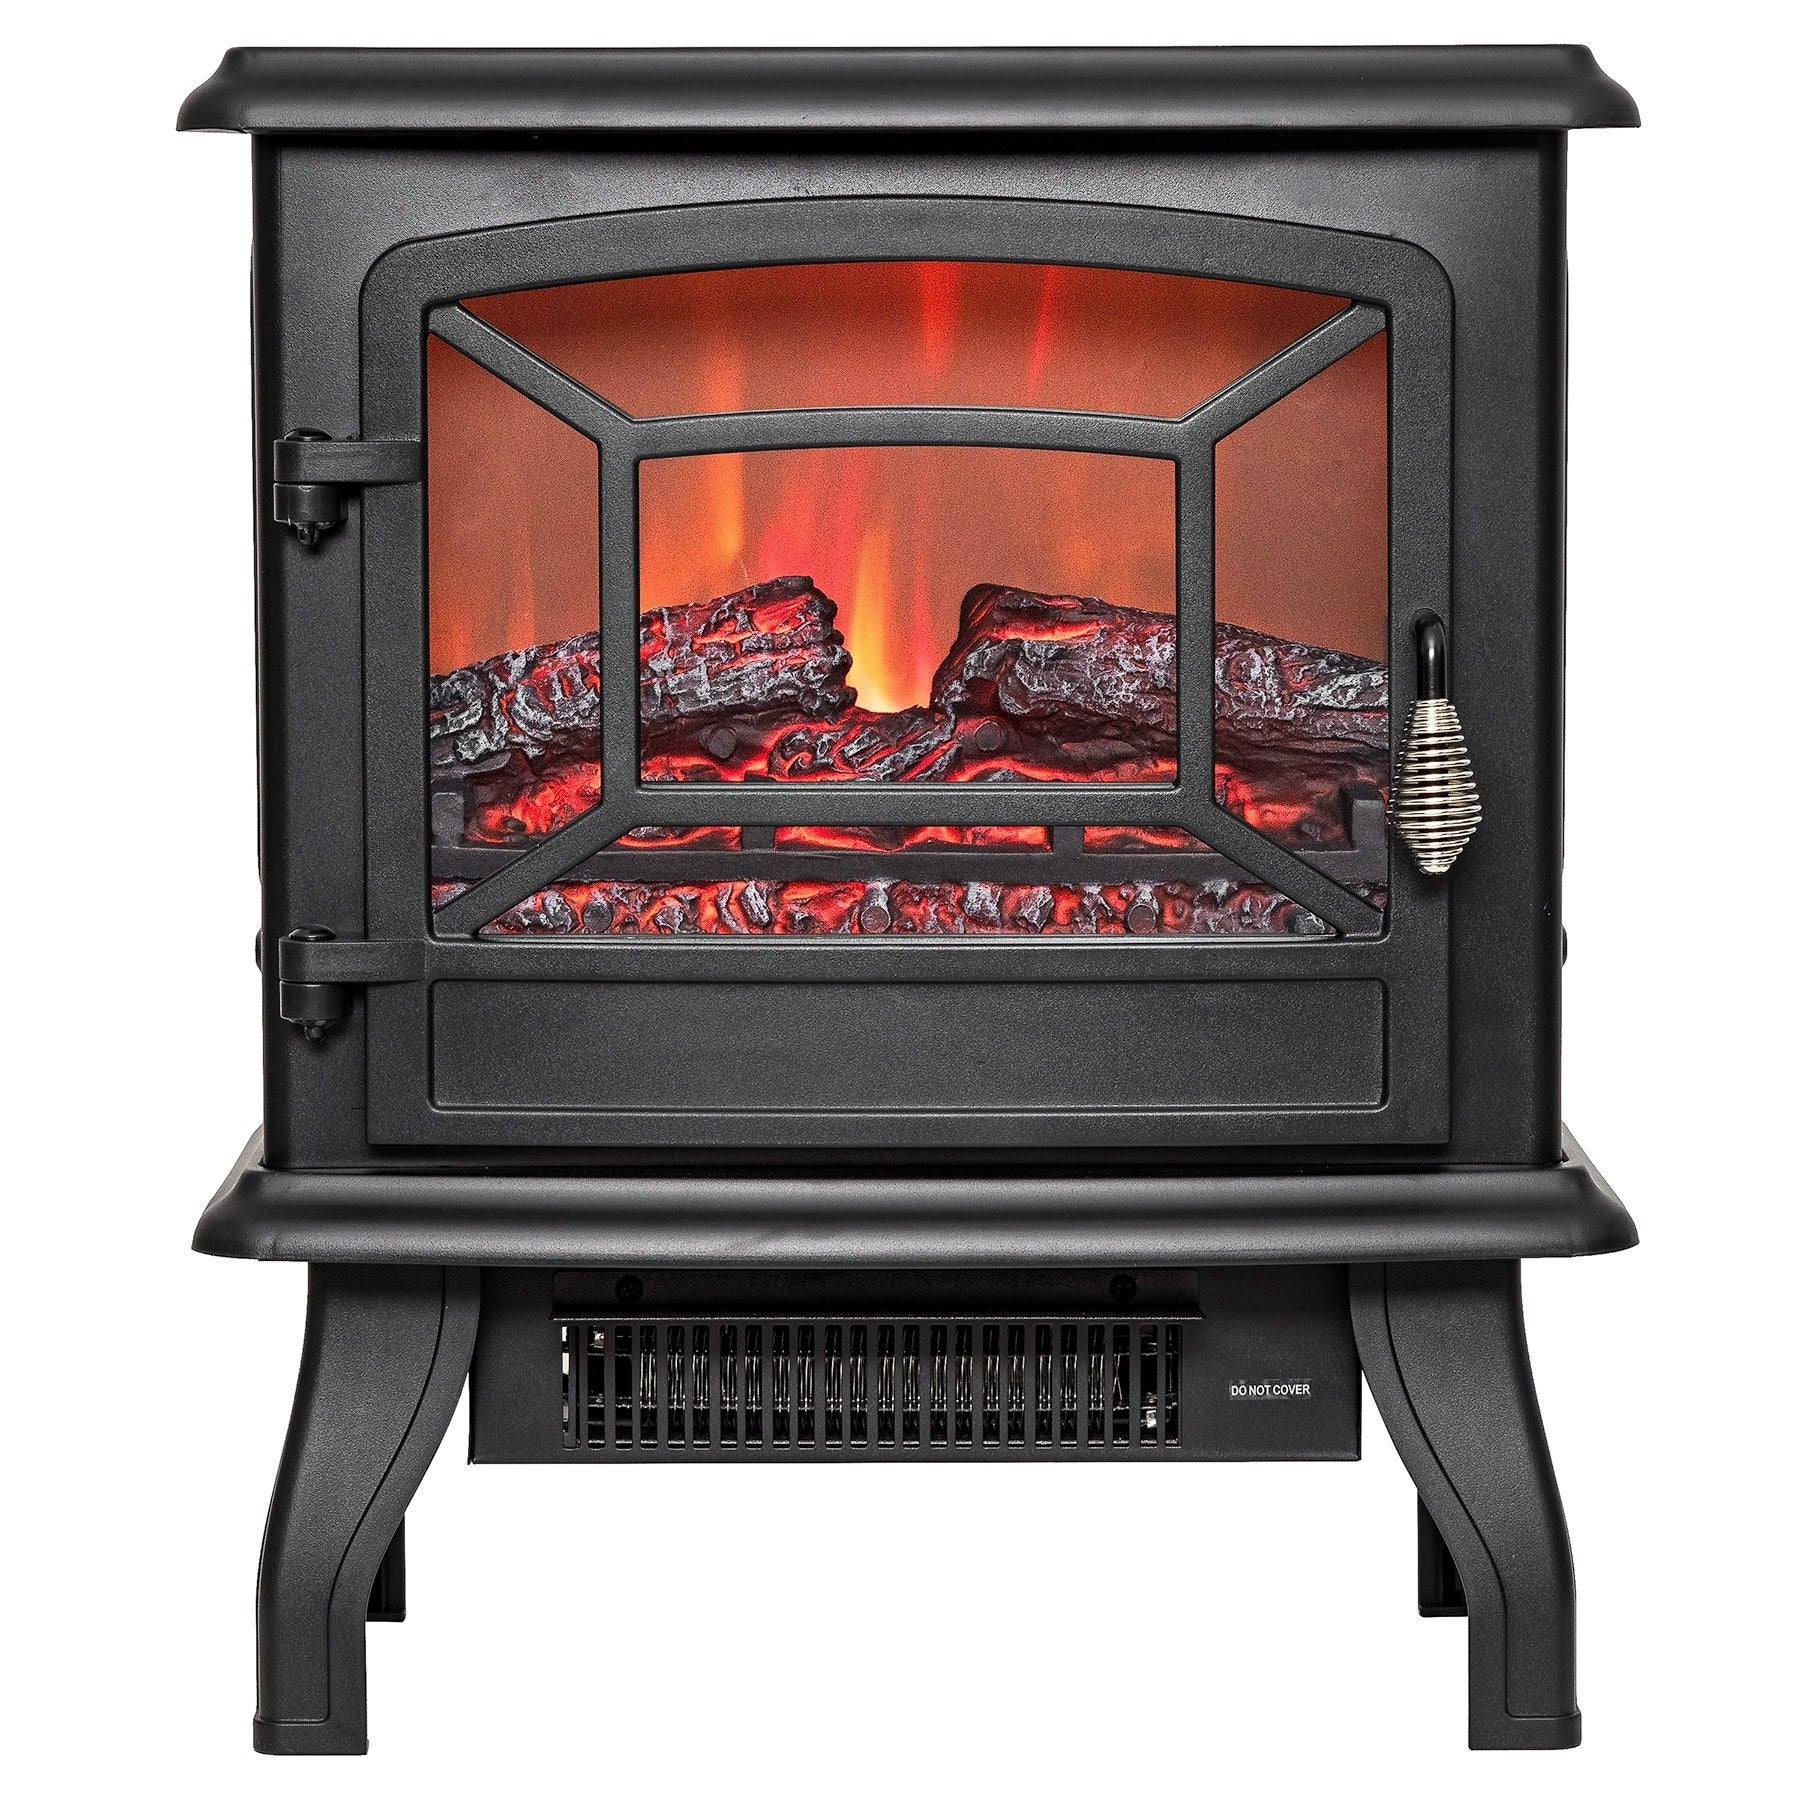 Gel Fuel Fireplace Logs Unique Akdy Fp0078 17" Freestanding Portable Electric Fireplace 3d Flames Firebox W Logs Heater